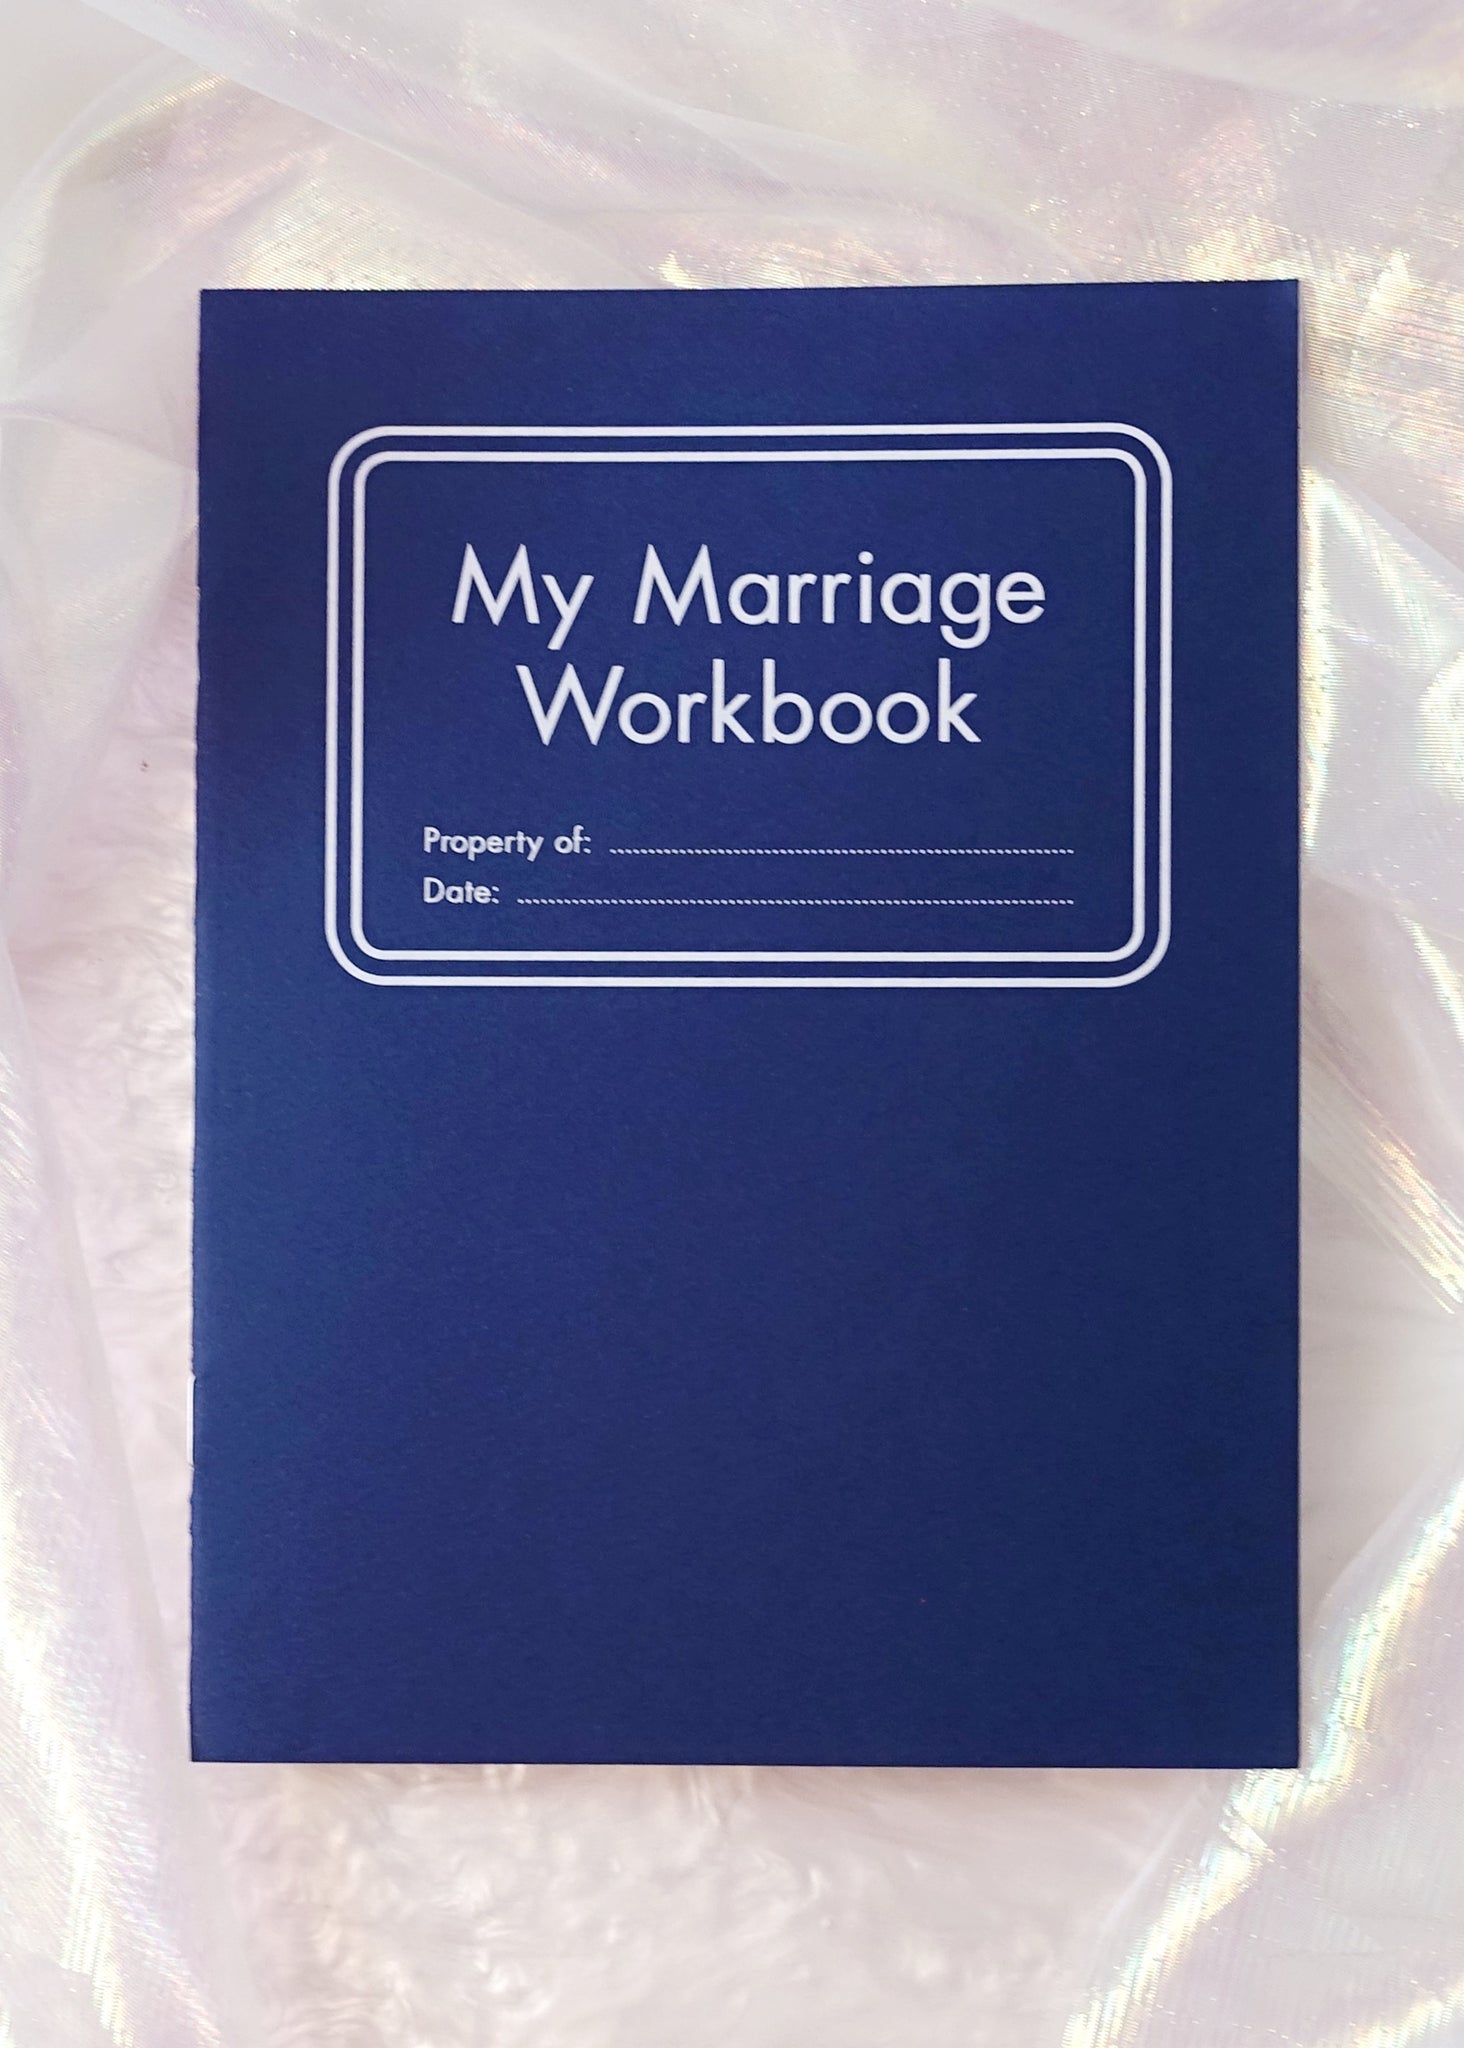 My Marriage Workbook